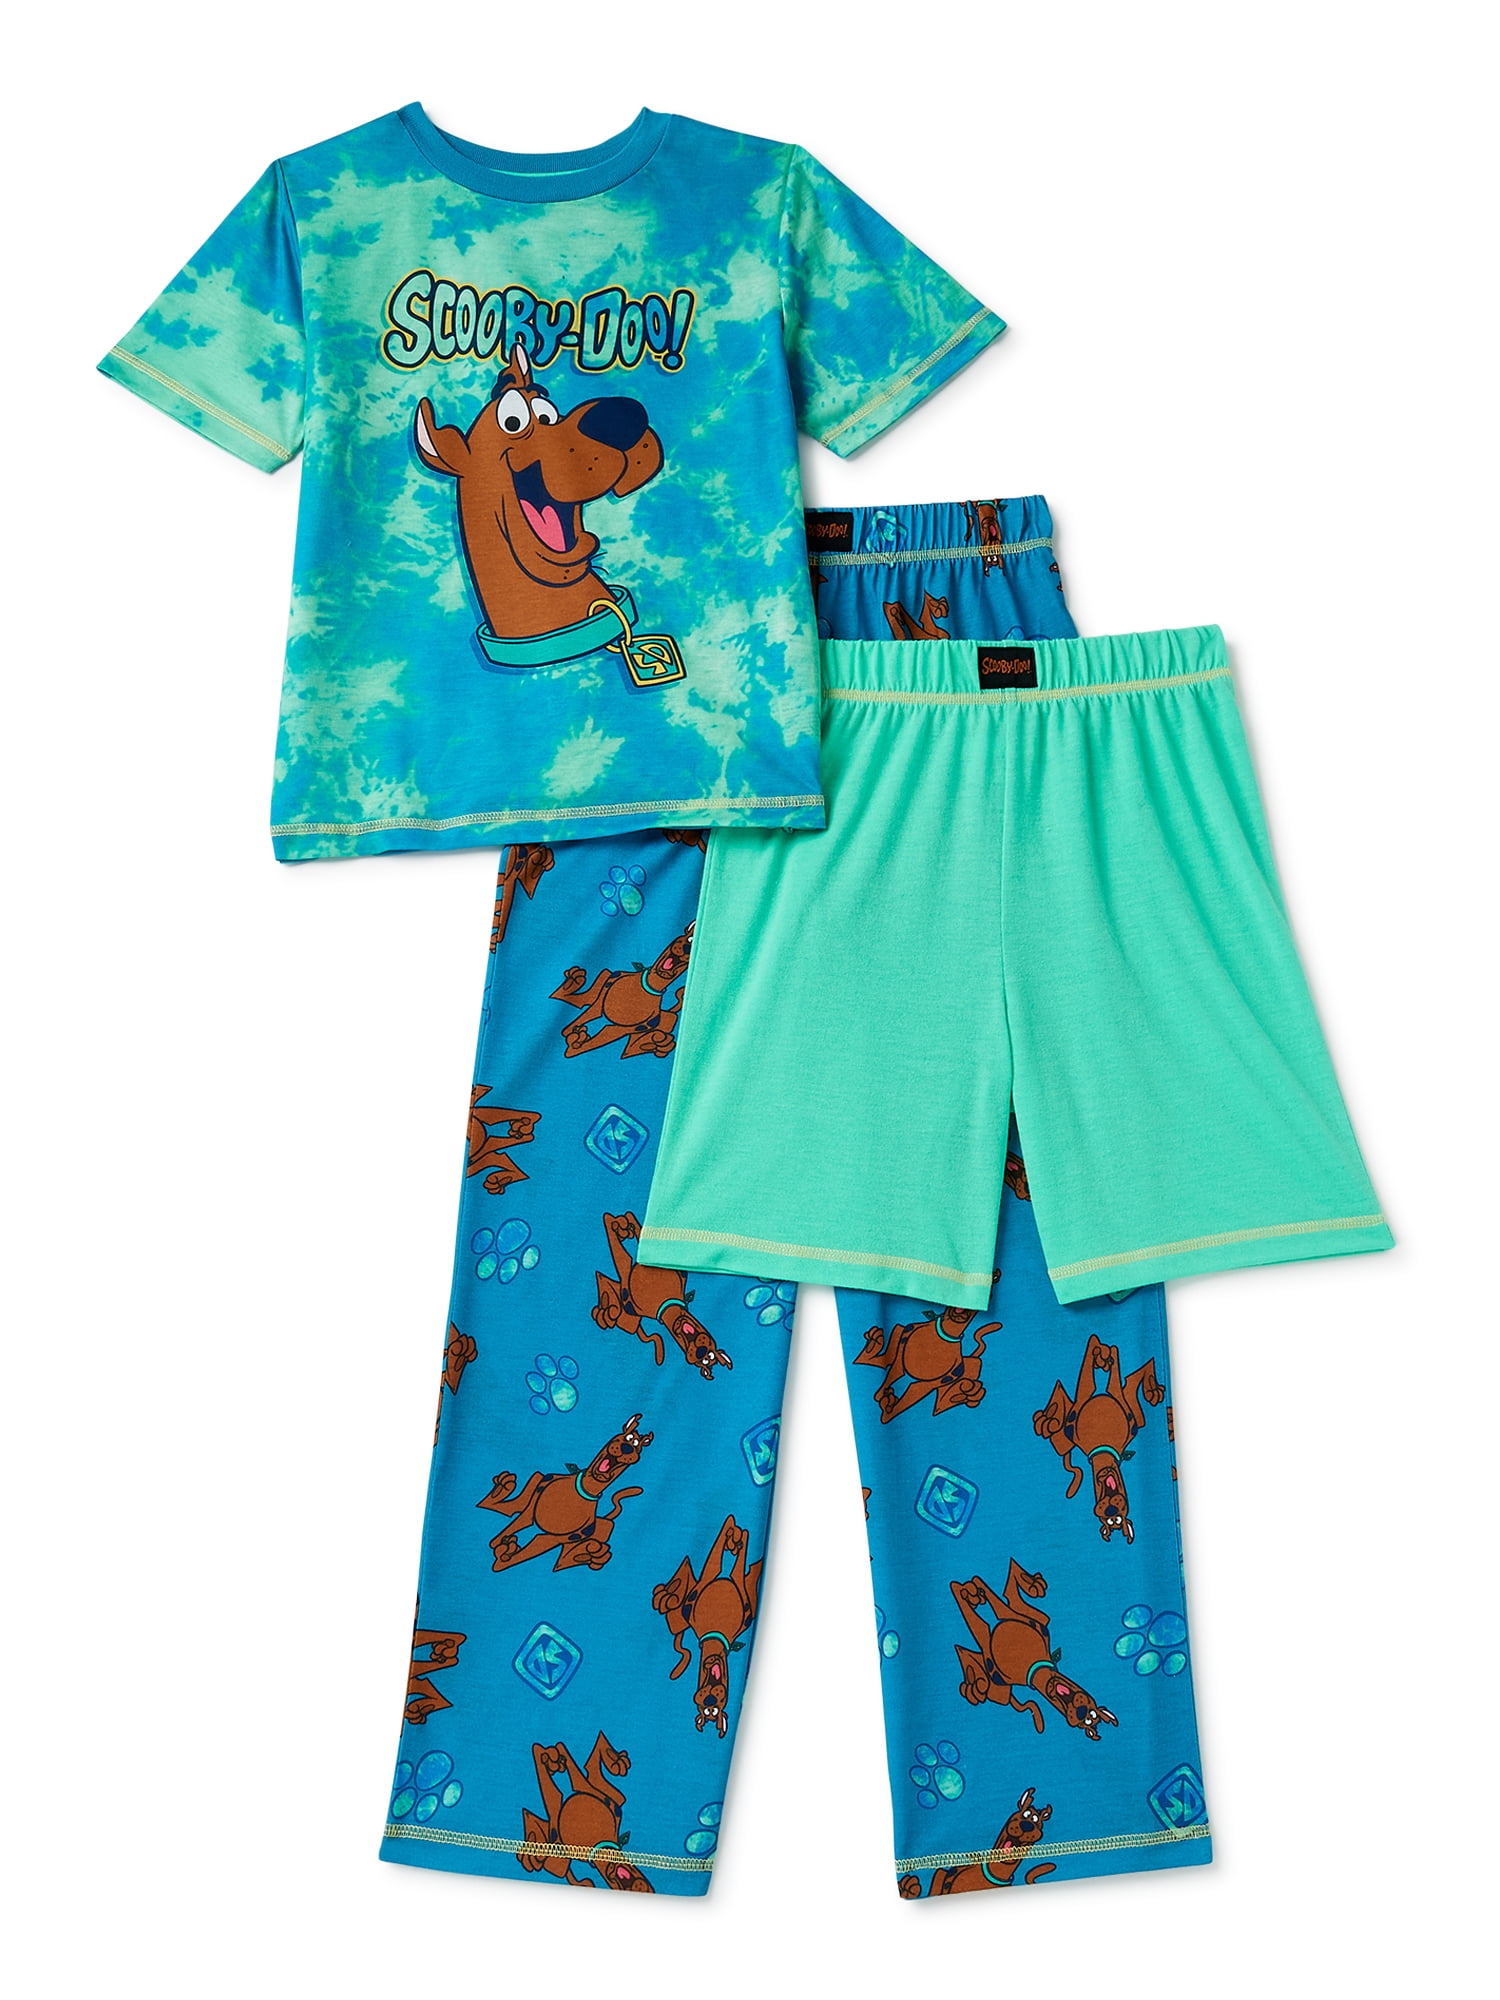 Garçons Scooby Doo Long Pyjamas Lot Âge 4-5 5-6 7-8 ans nouveau film Vert Bottoms 